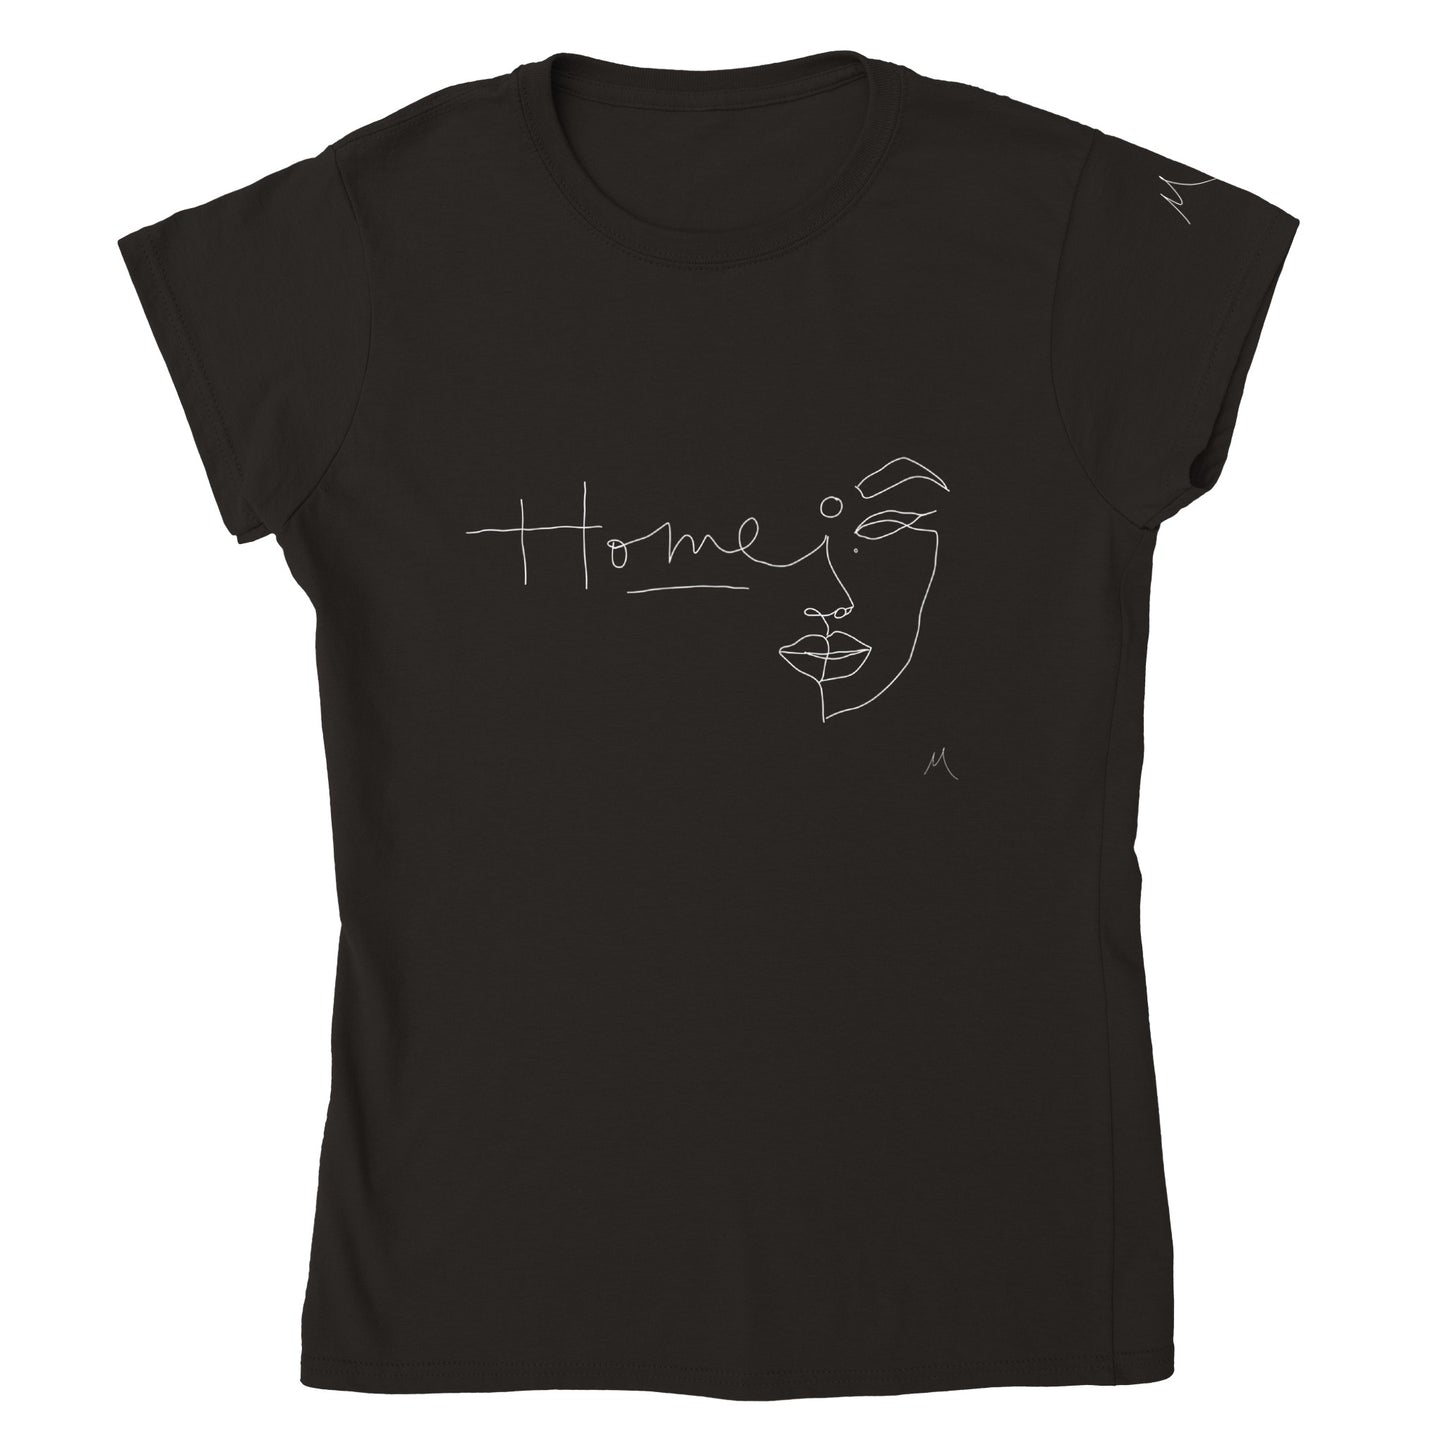 Home, Line Art She* Shirt